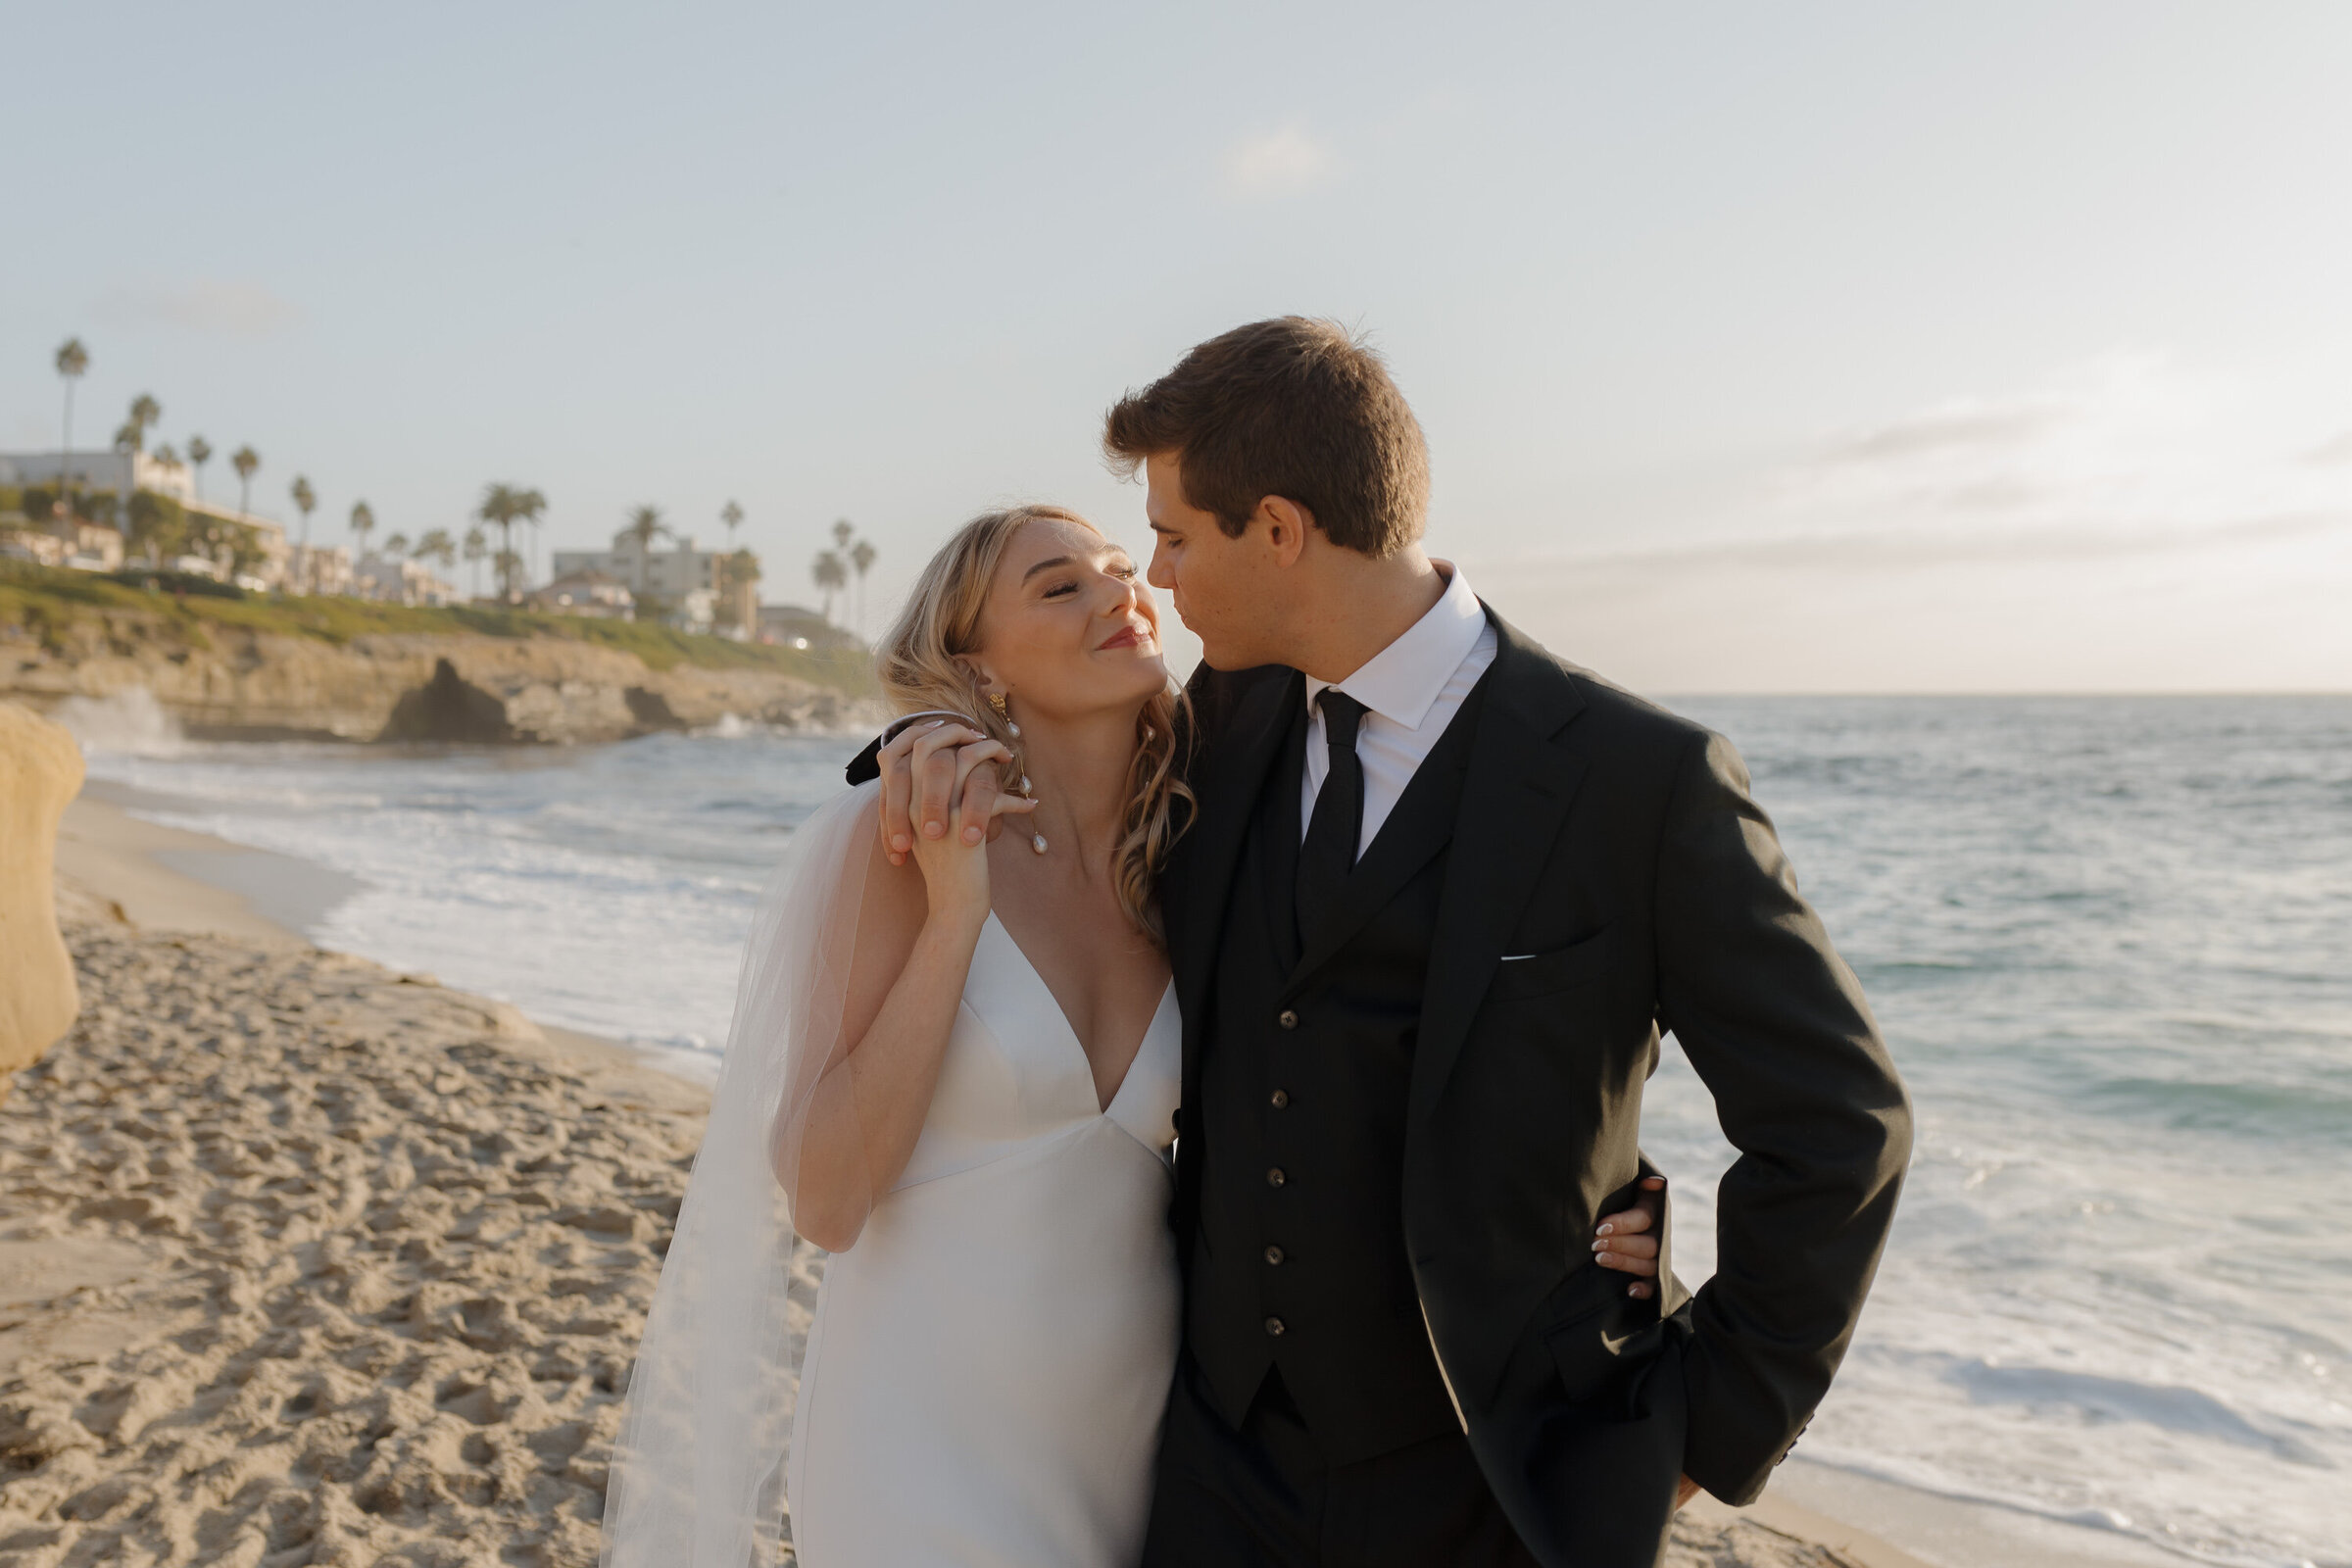 Lexx-Creative-San Diego-California-Wedding-Photographer-7